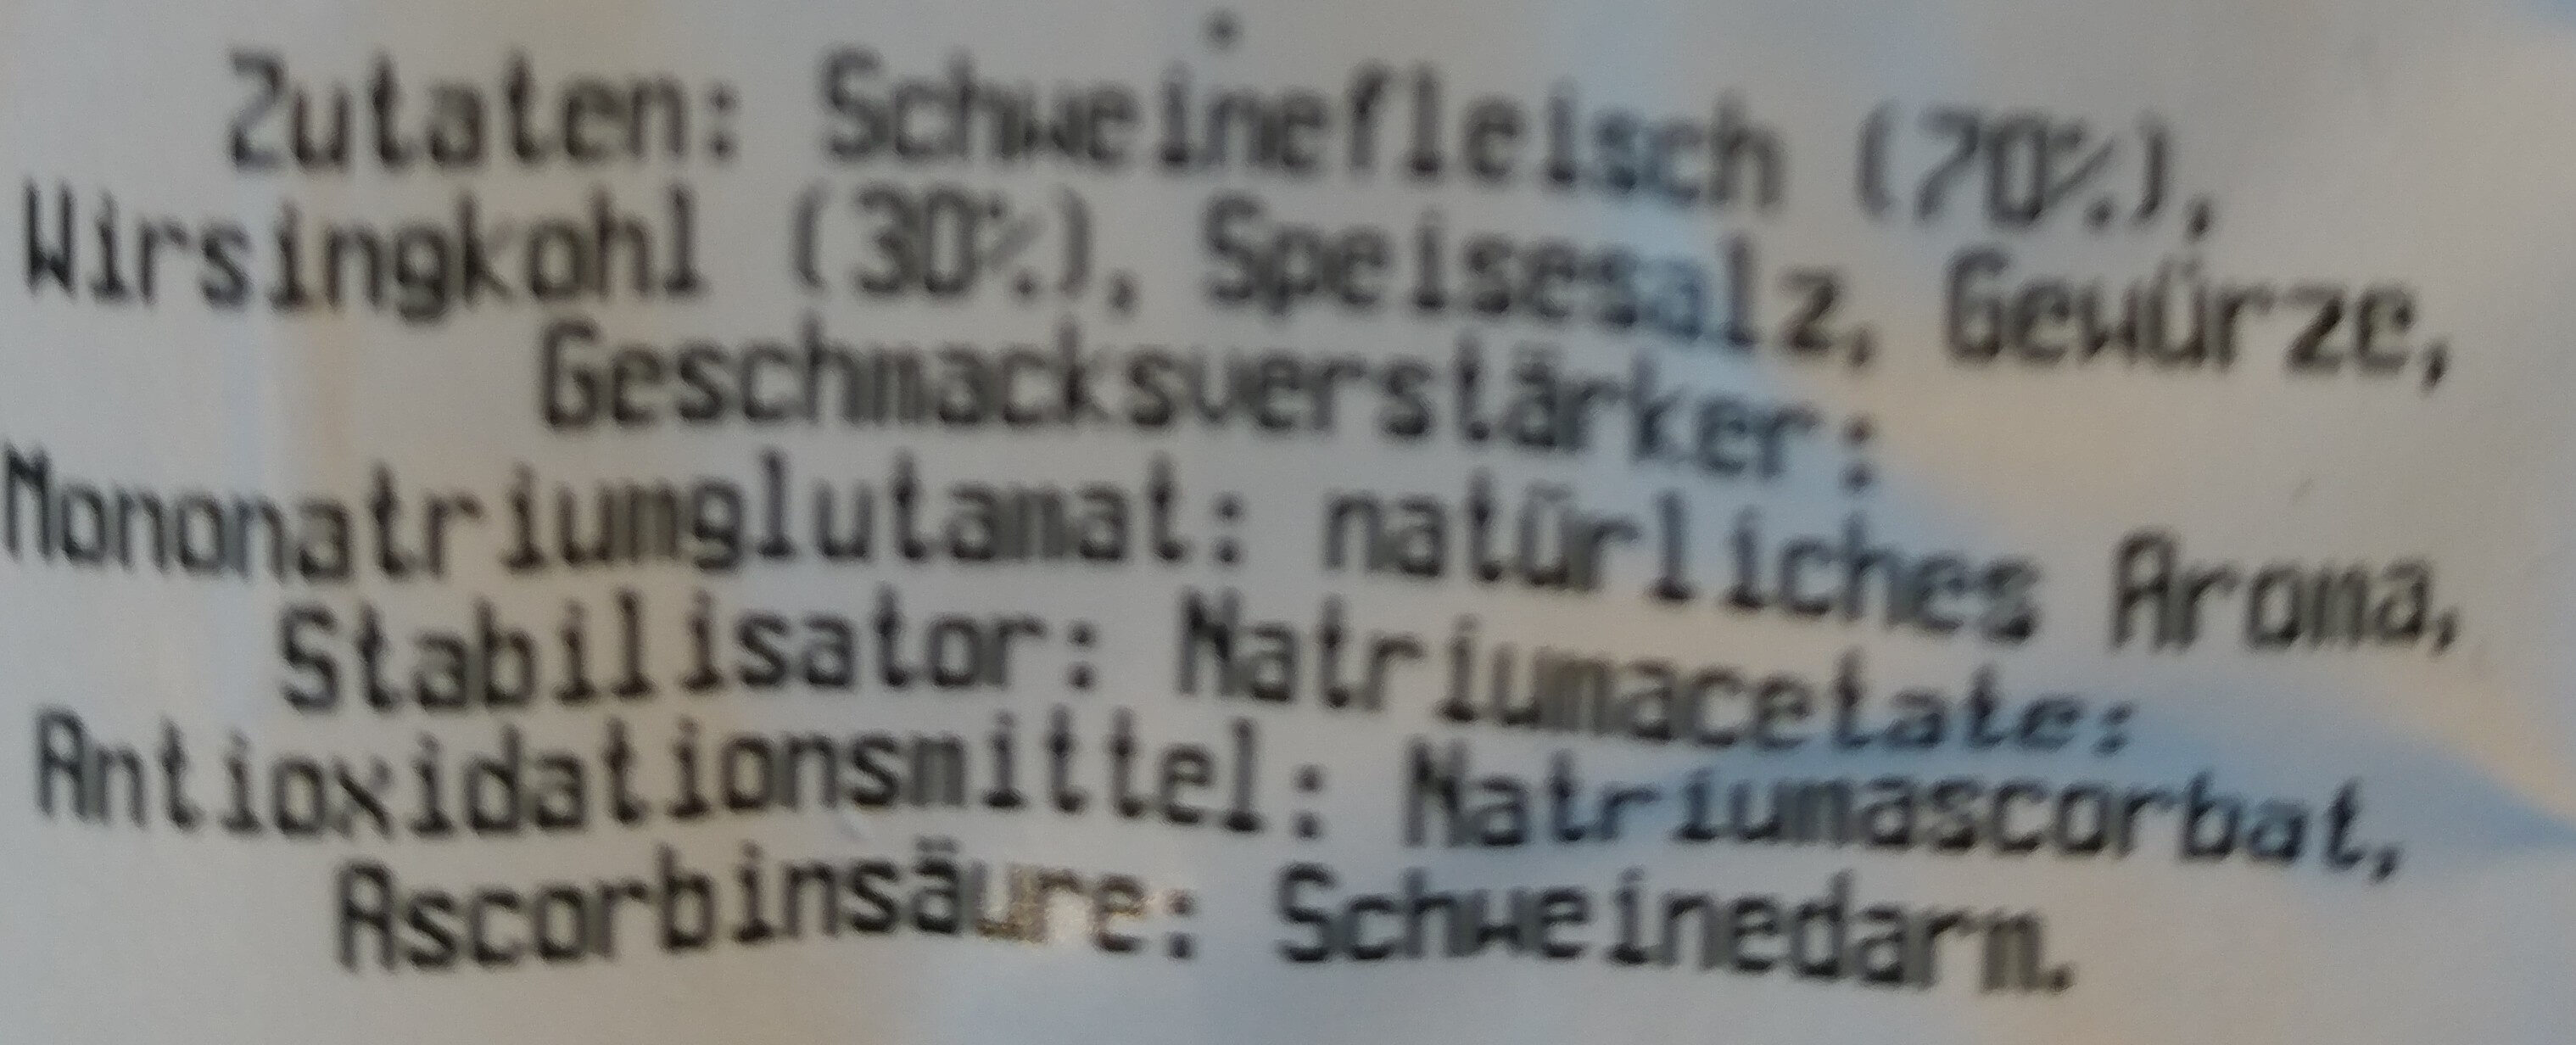 Kohlbratwurst - Ingredients - de